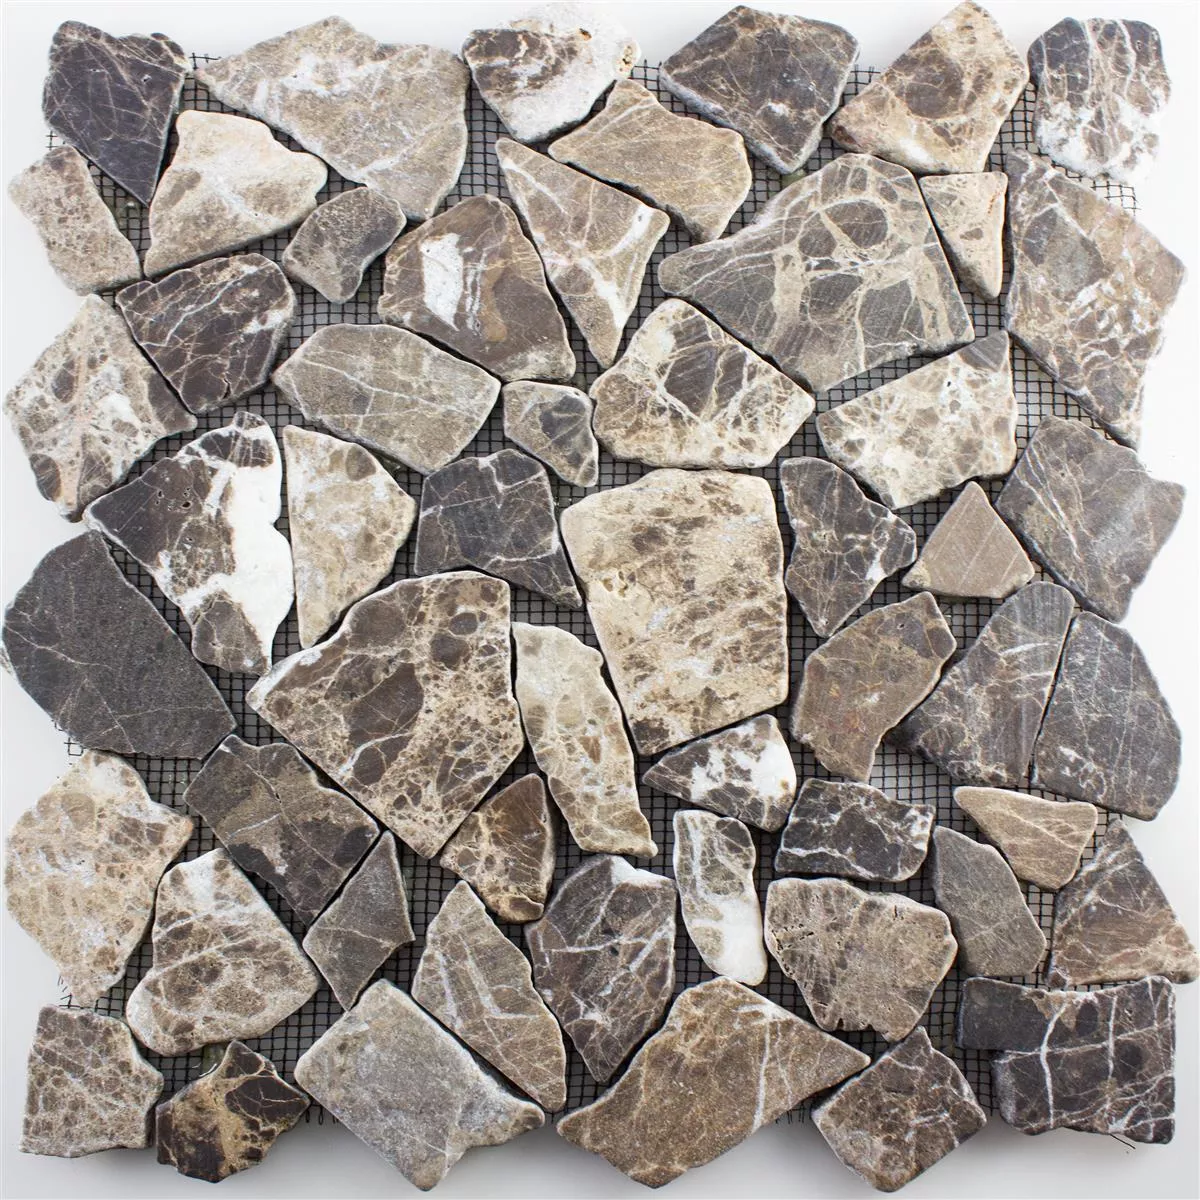 Sample Marble Broken Natural Stone Tiles Poseidon Castanao